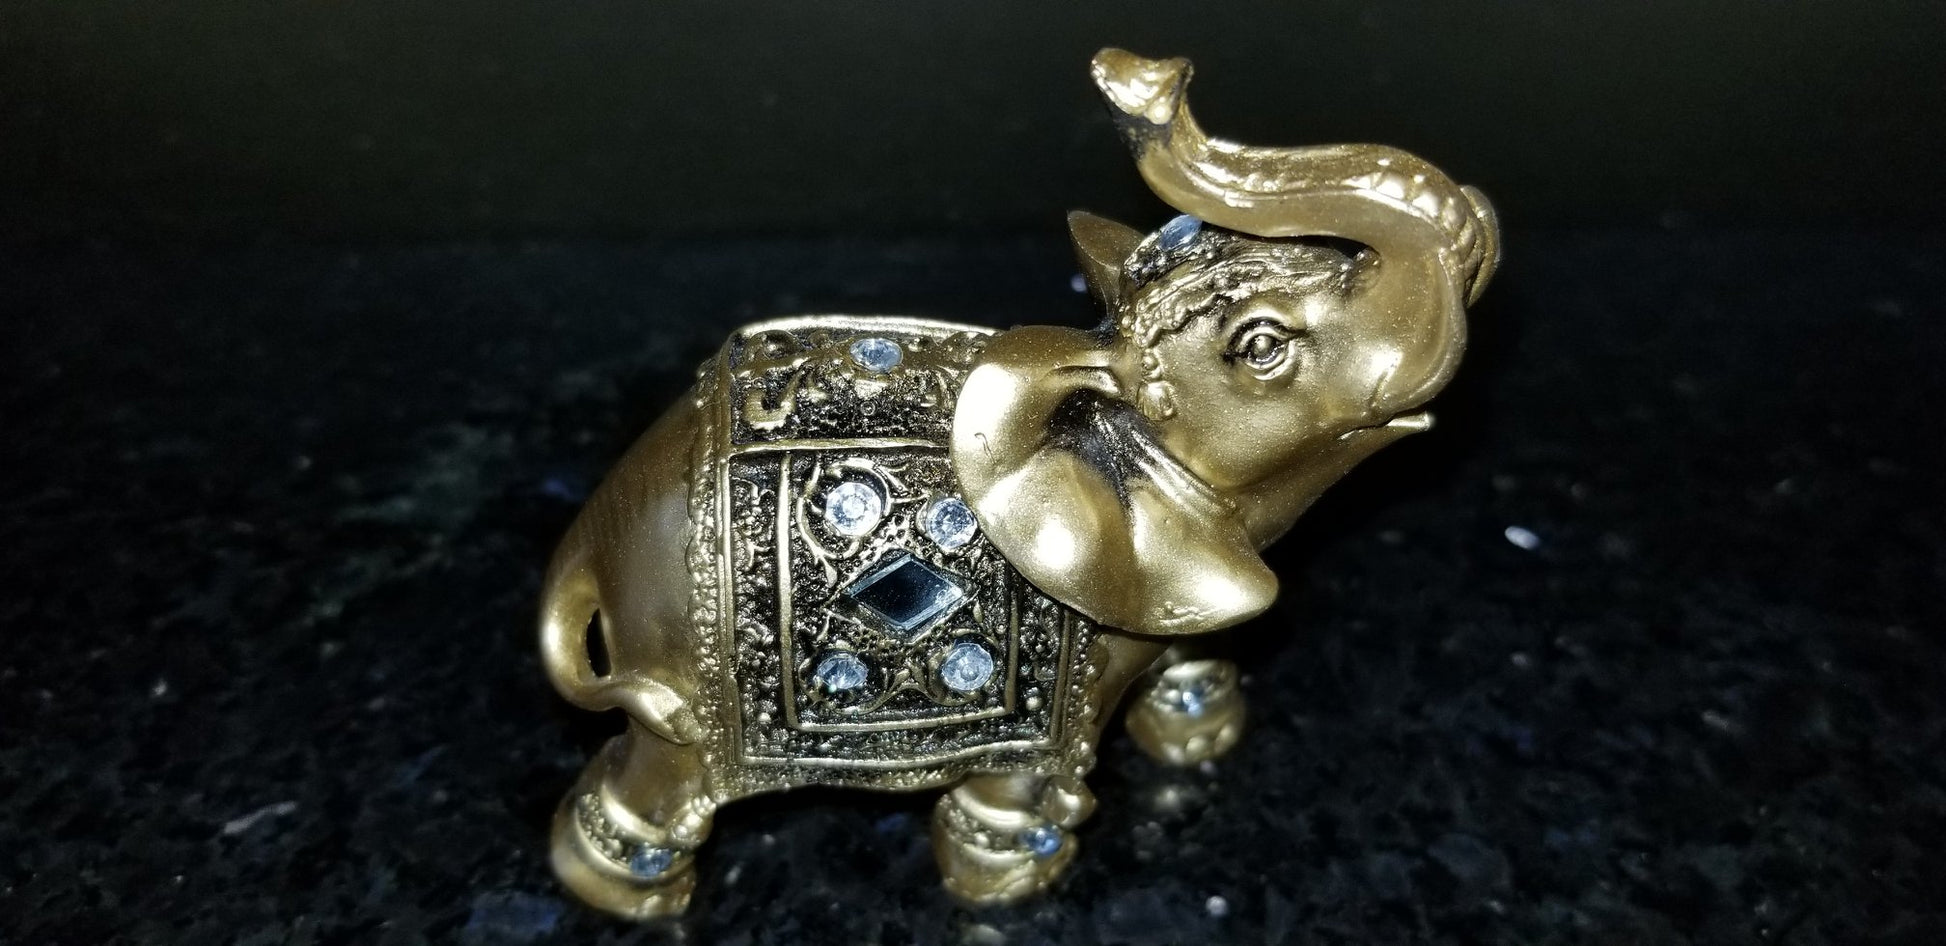 jeweled elephant ornament for sale